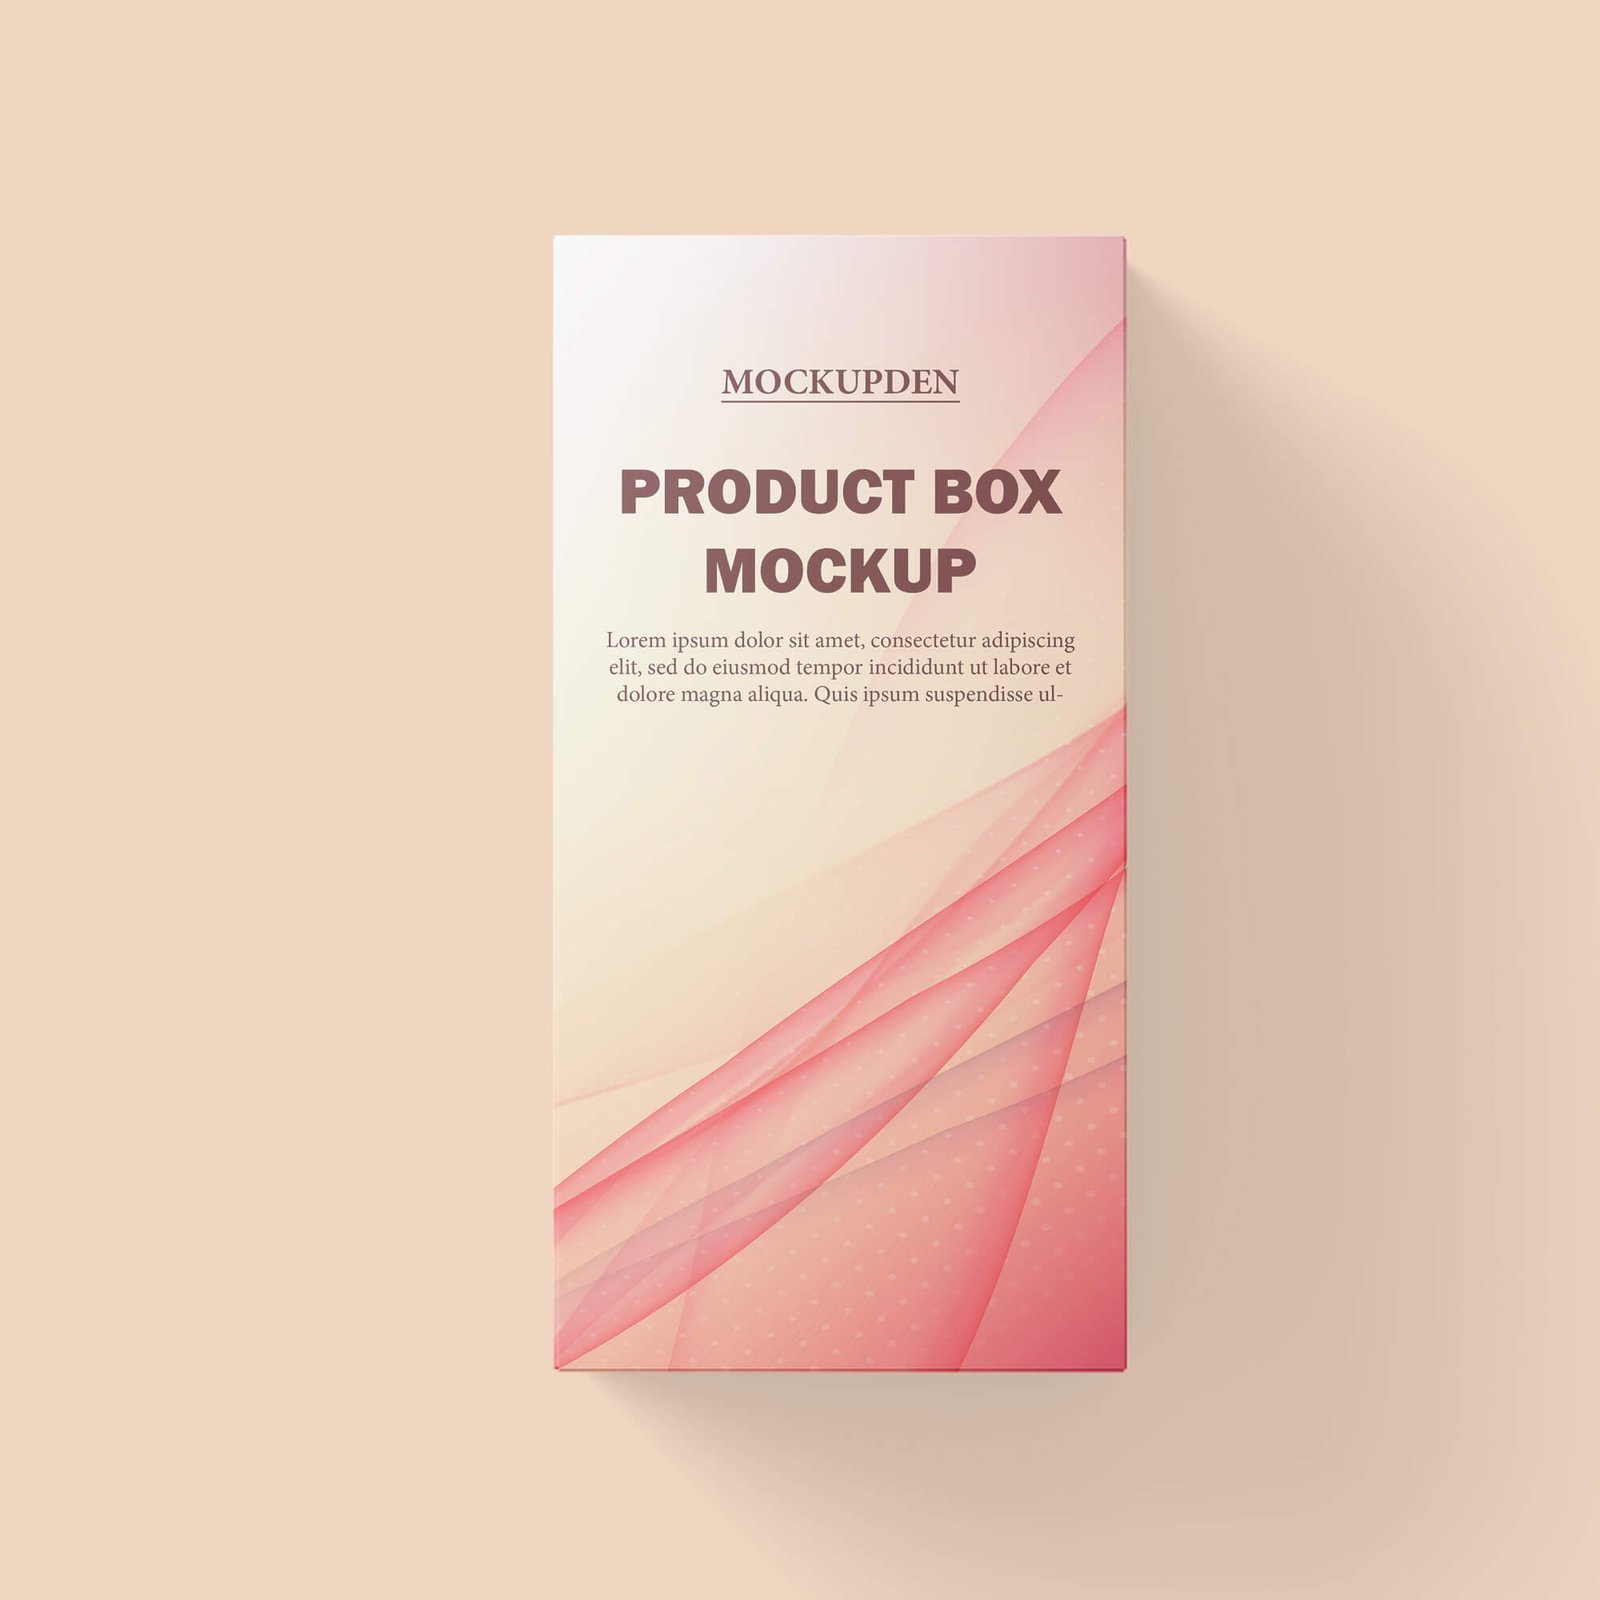 Design Free Product Box Mockup PSD Template